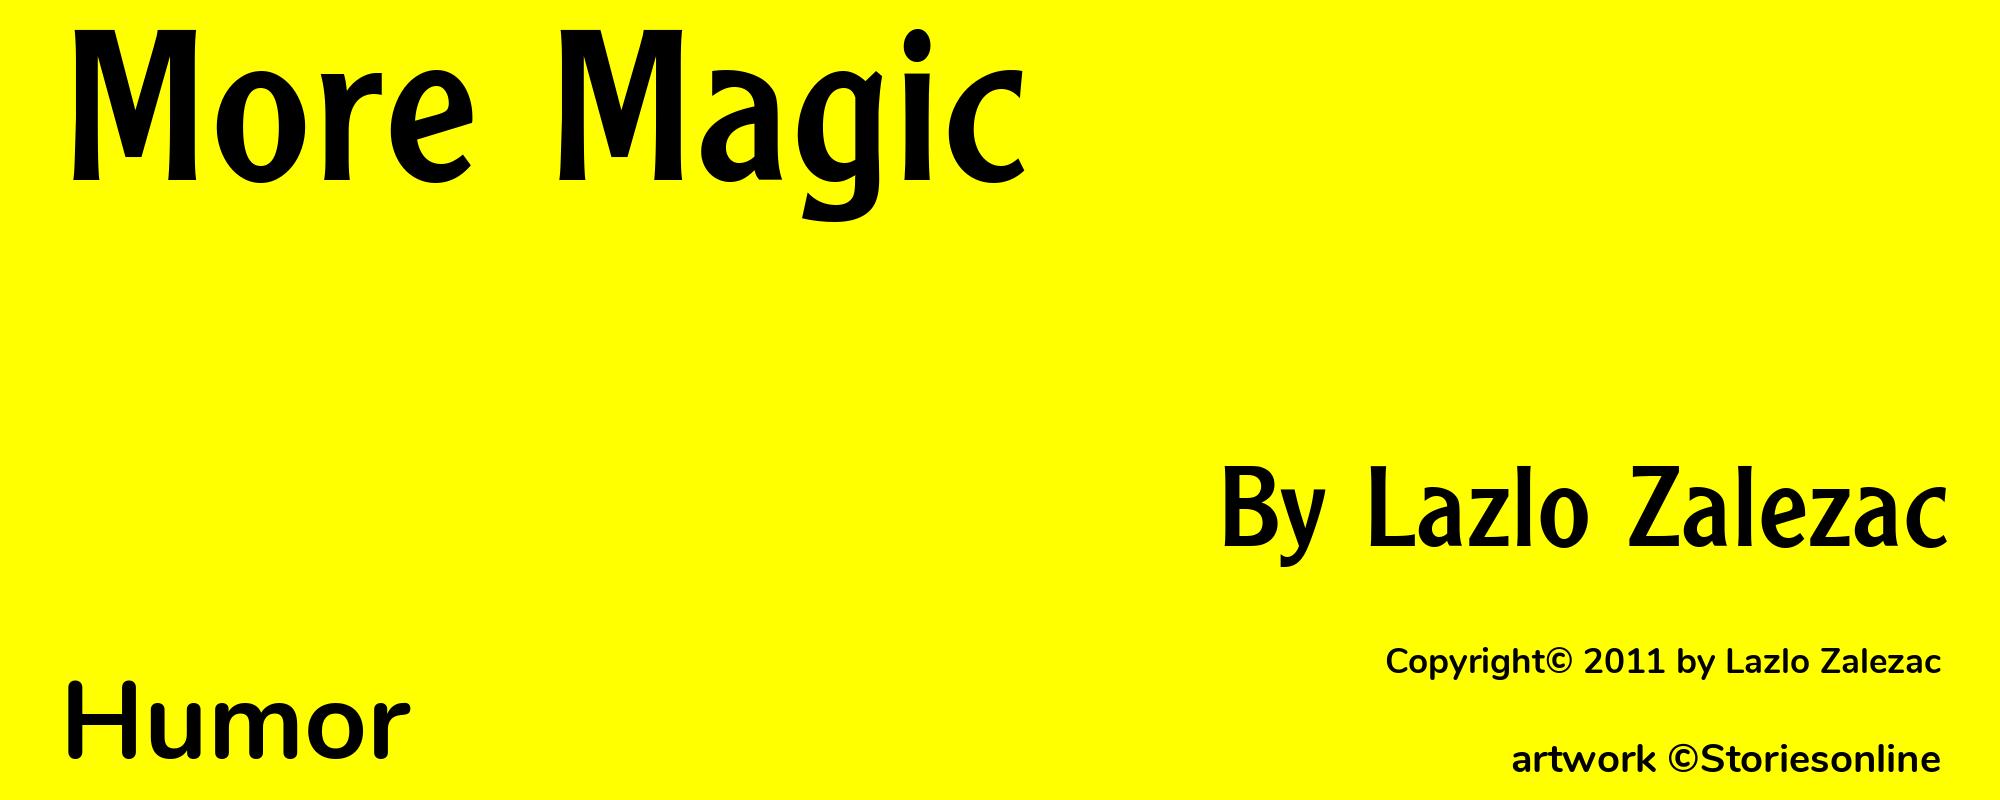 More Magic - Cover